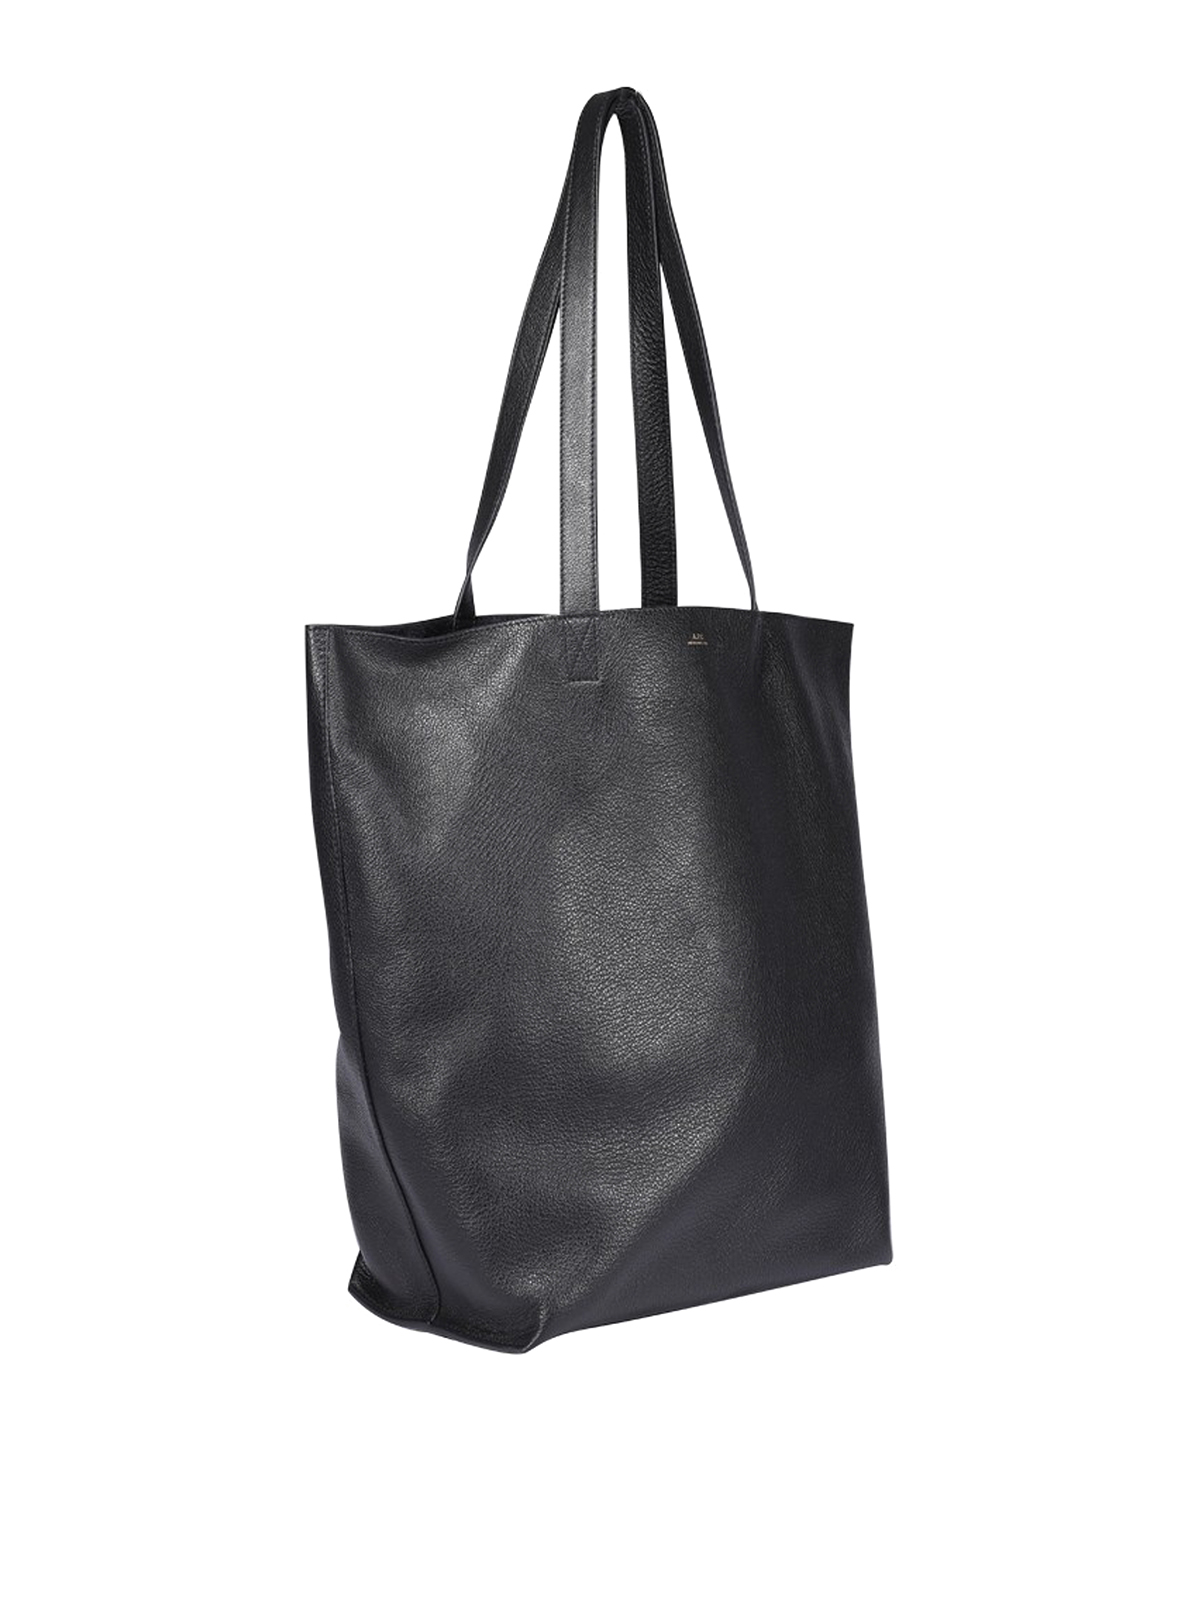 Mayko Bags Leather Tote Bag